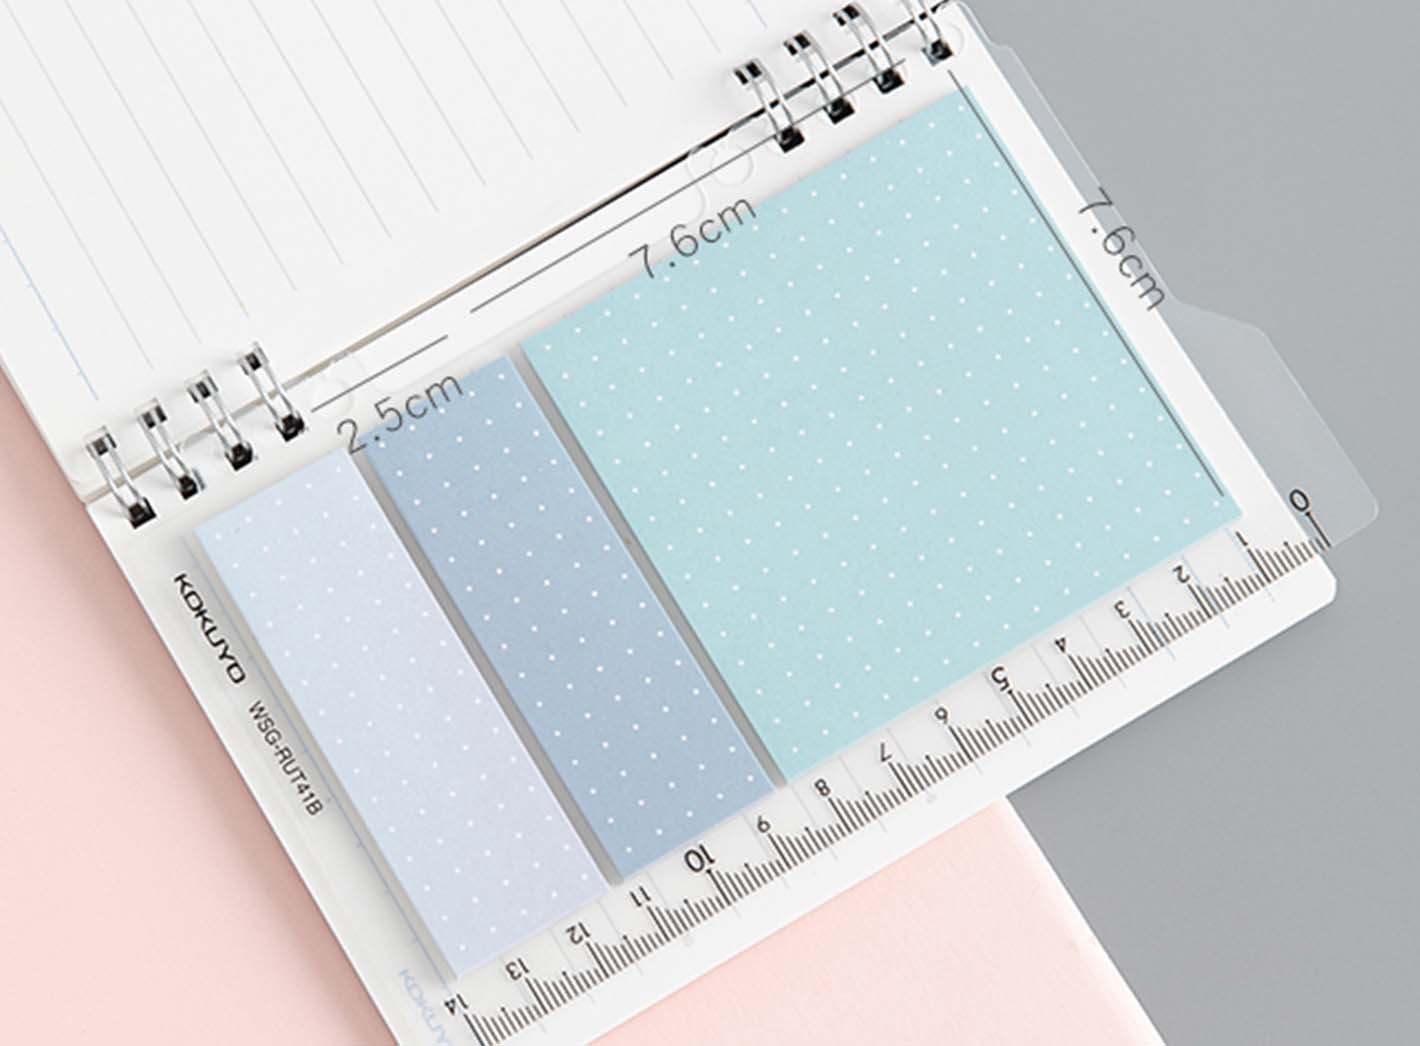 Kokuyo Tack Memo N Sticky Notes - Mini Slim - 5.0 cm x 0.7 cm - 4 Colors